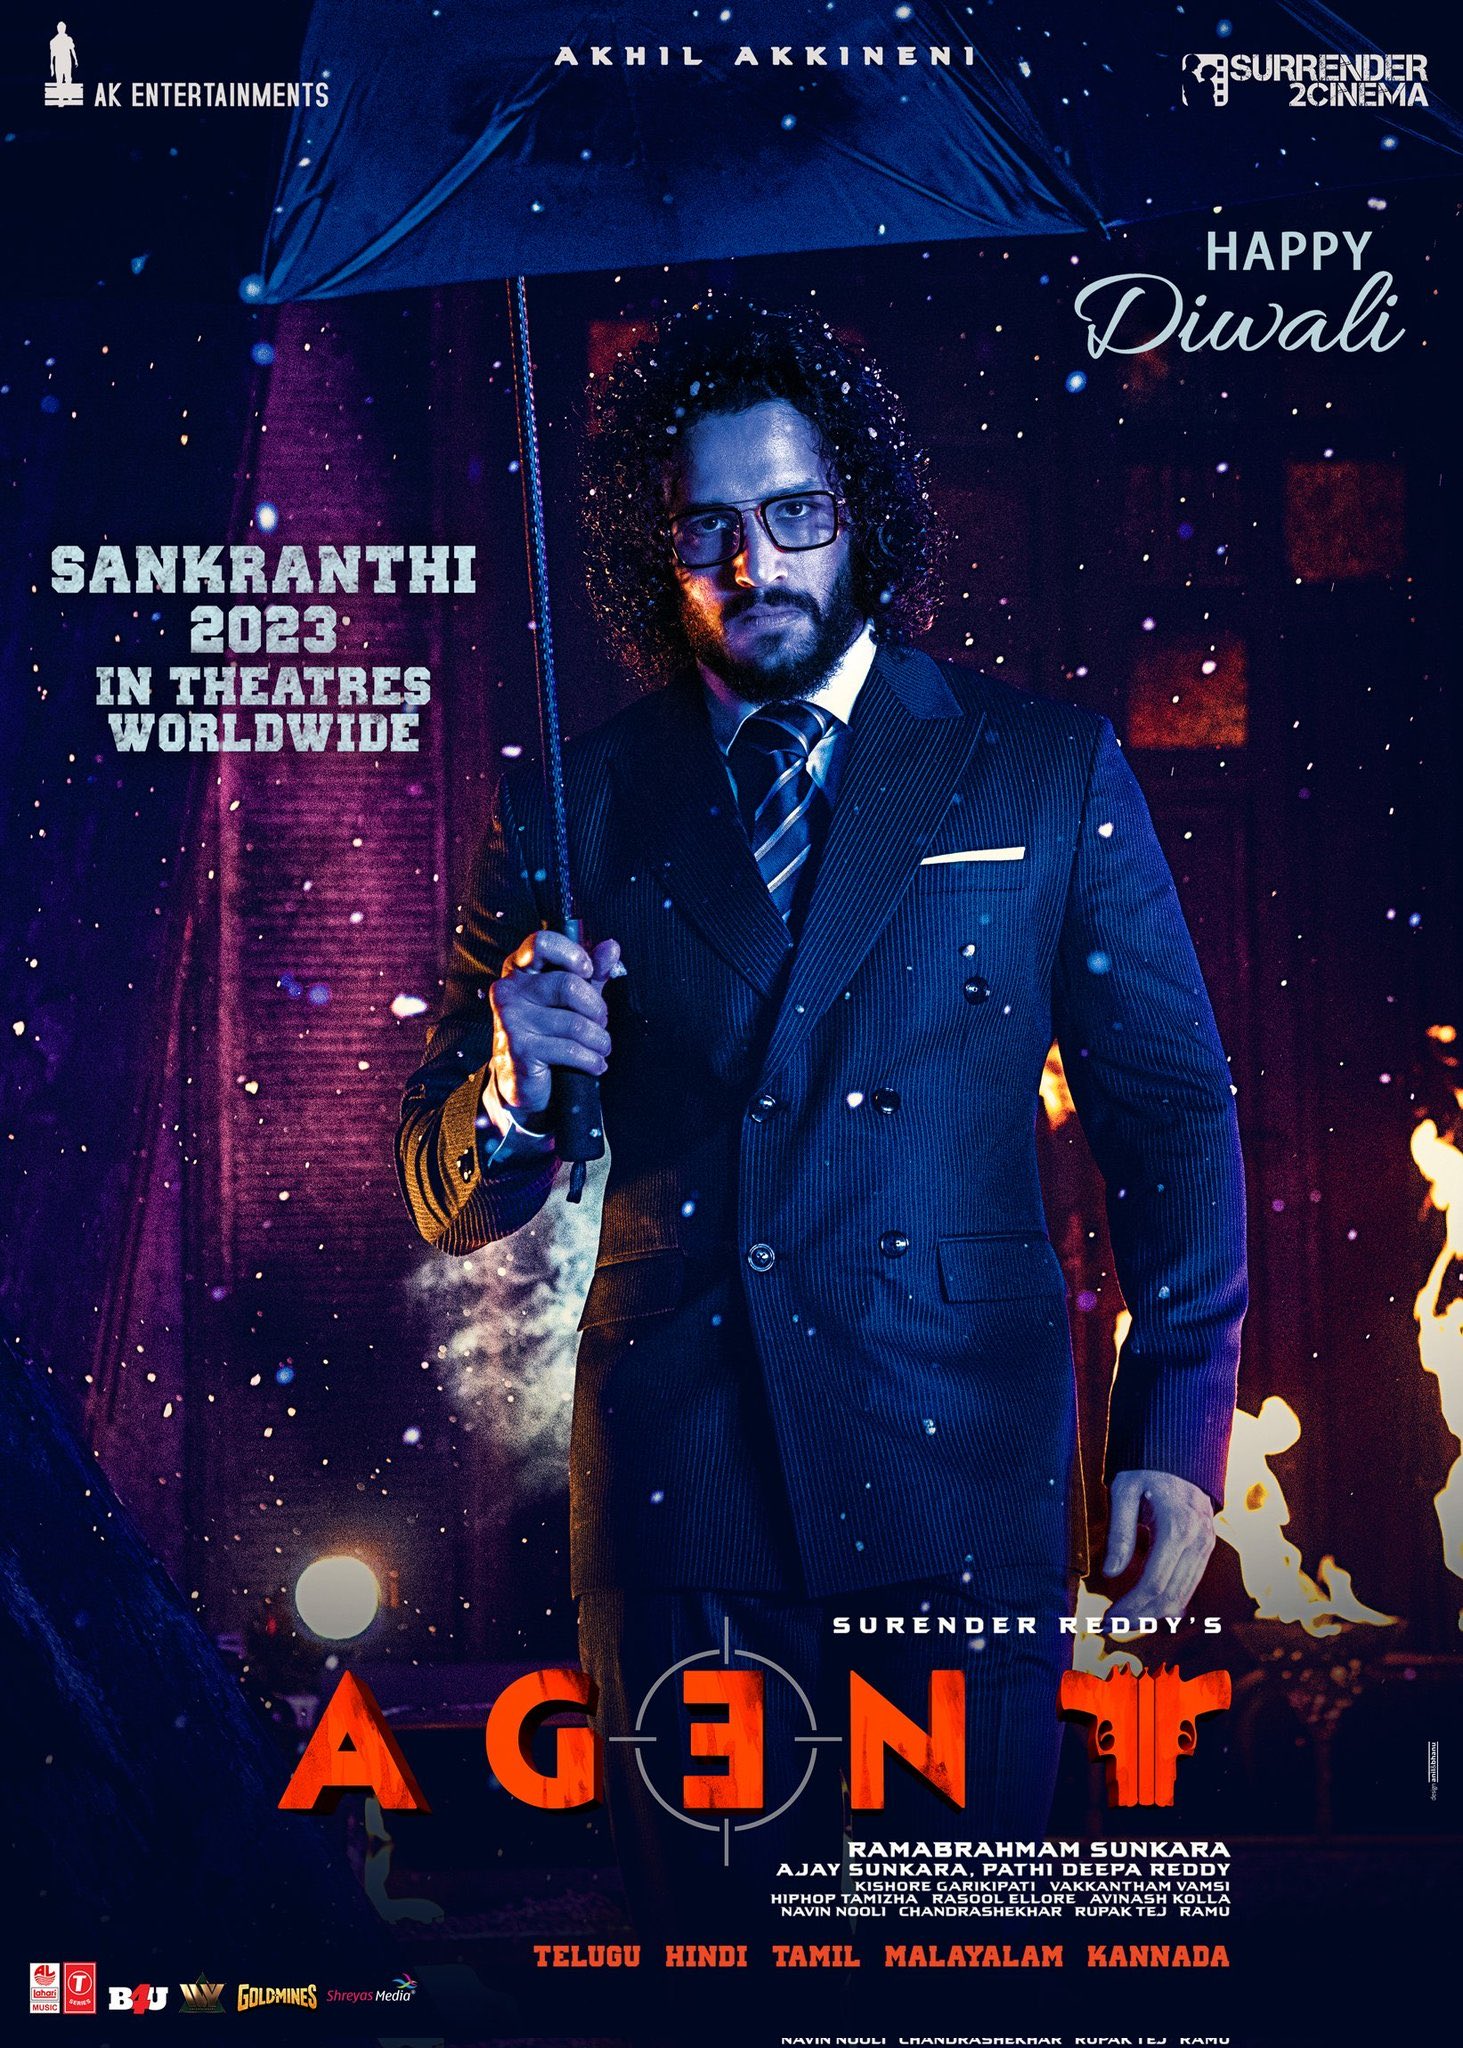 Akhil Akkineni's Agent Movie Releasing For Sankranthi, 2023. New Movie Posters